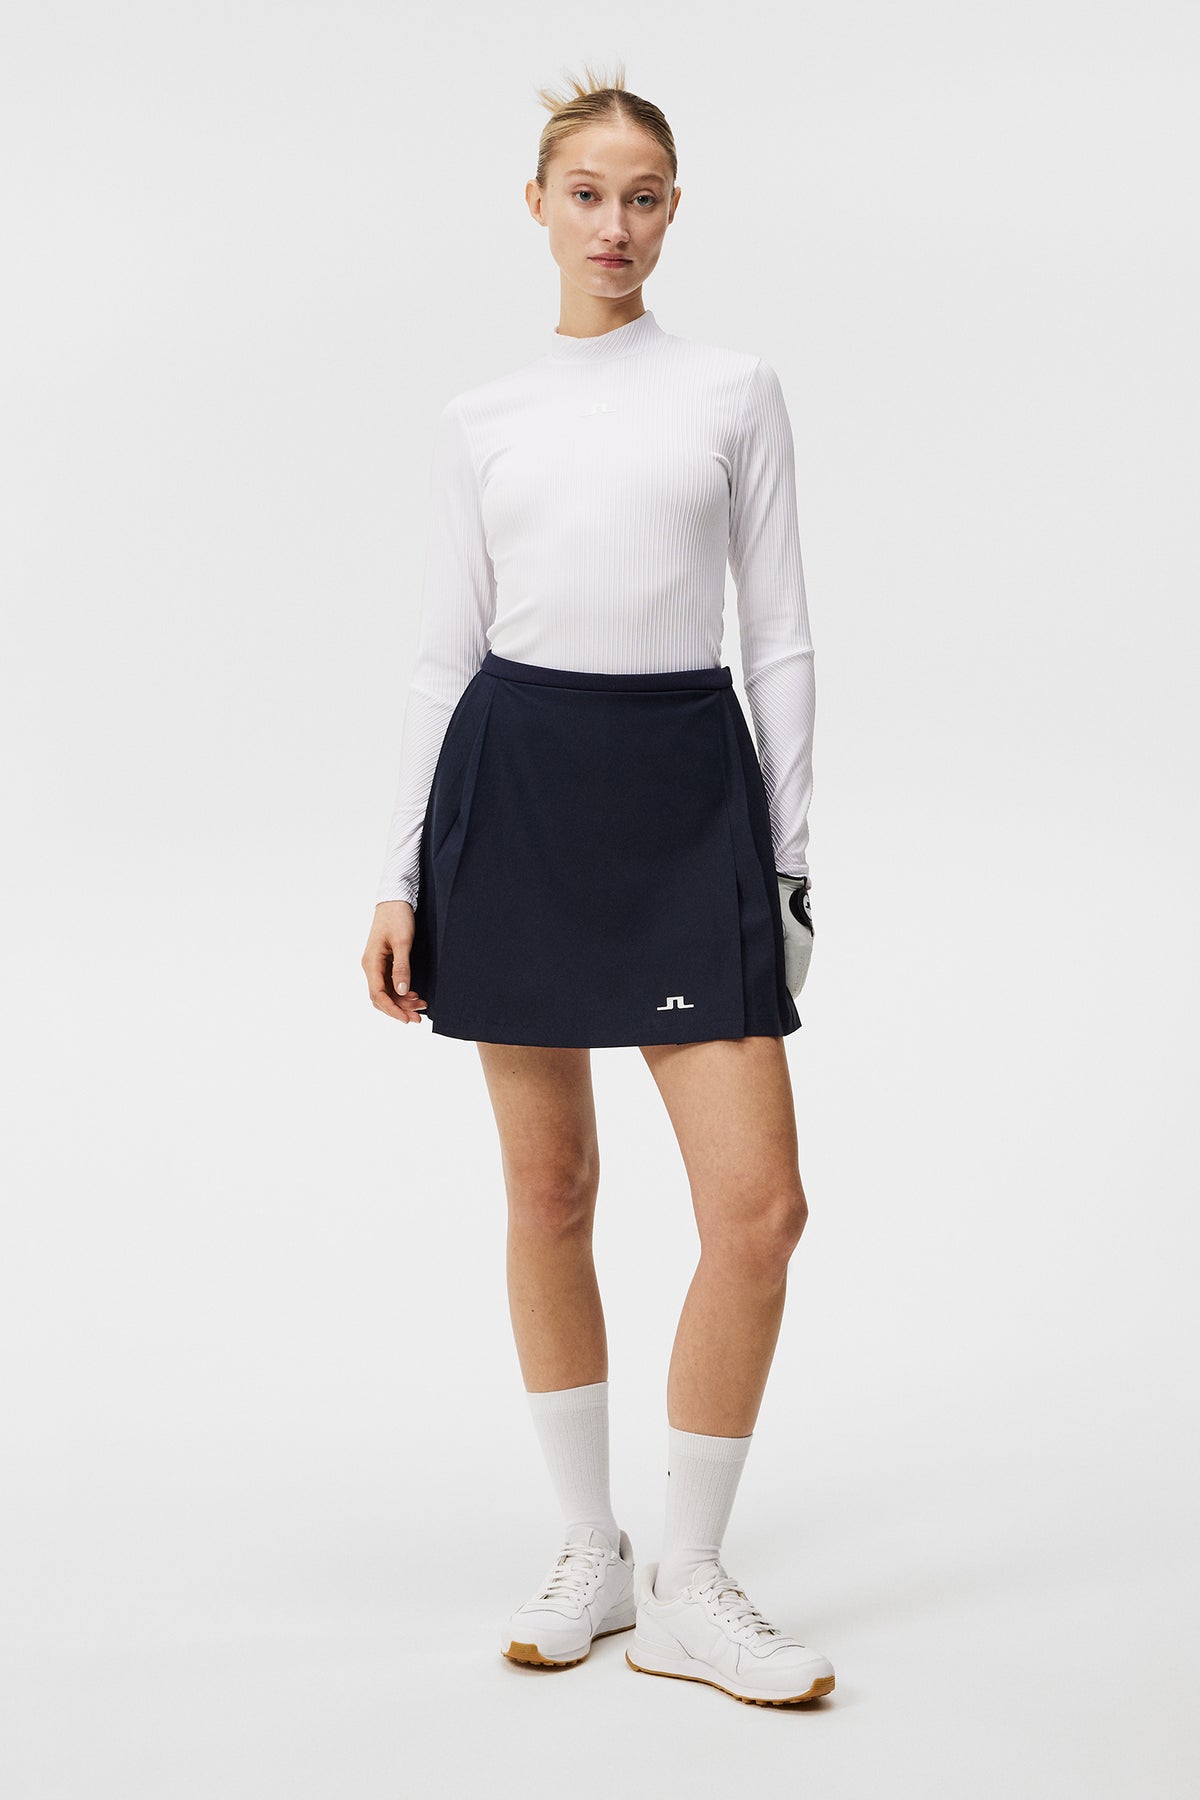 Sierra Pleat Skirt / JL Navy